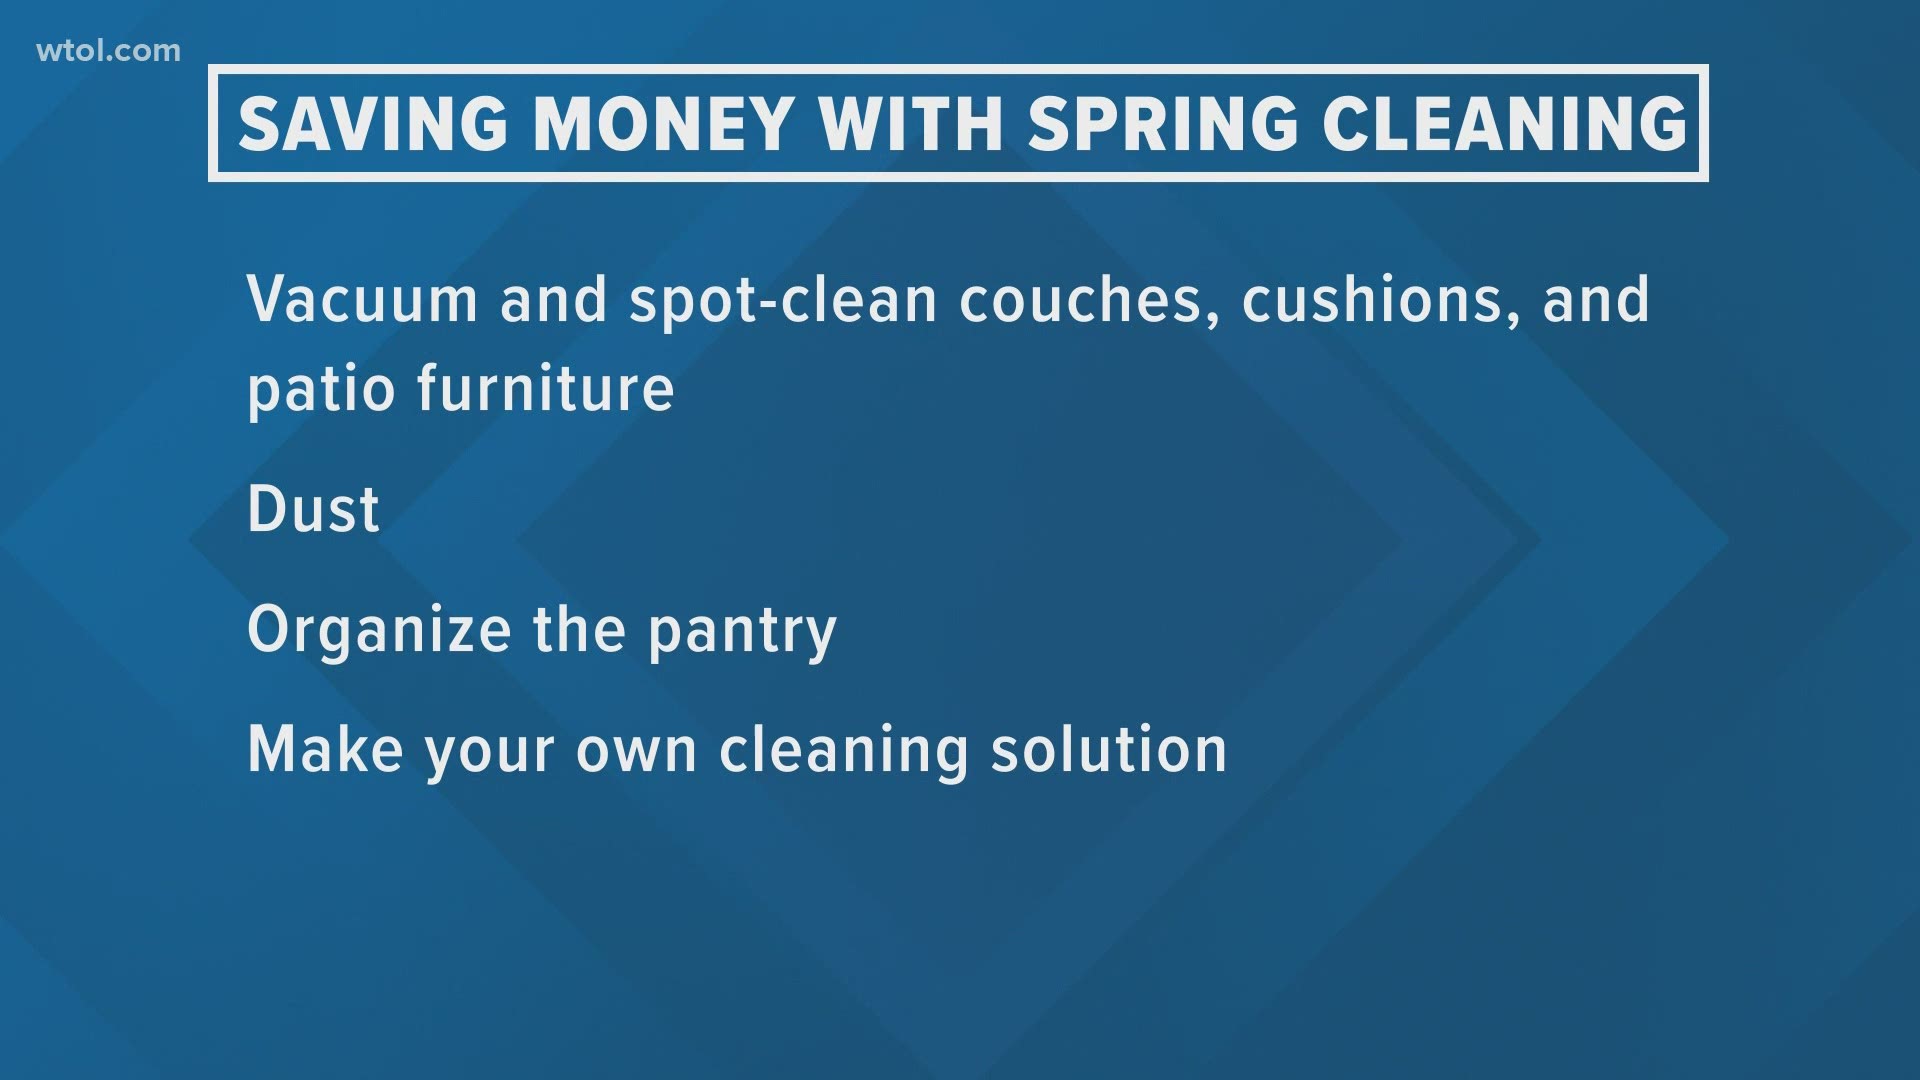 Tips on saving money through spring cleaning